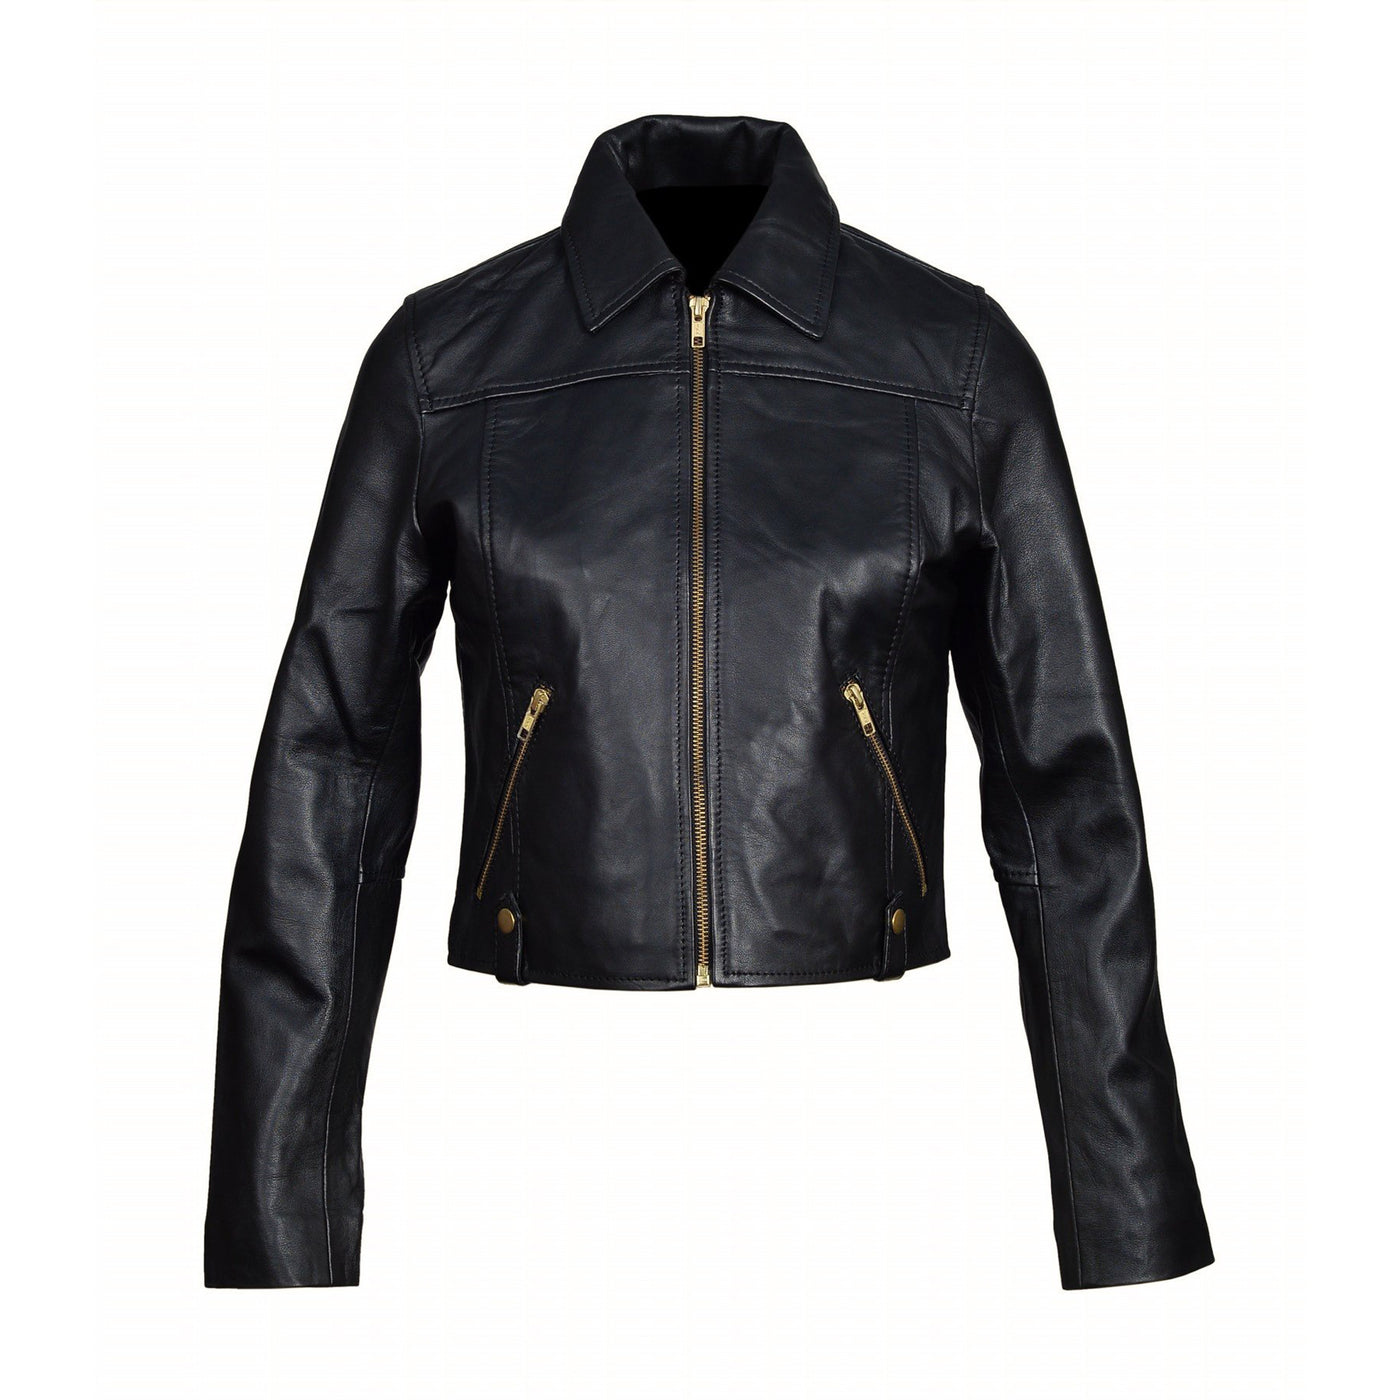 Unique Moesha's classic crop leather jacket